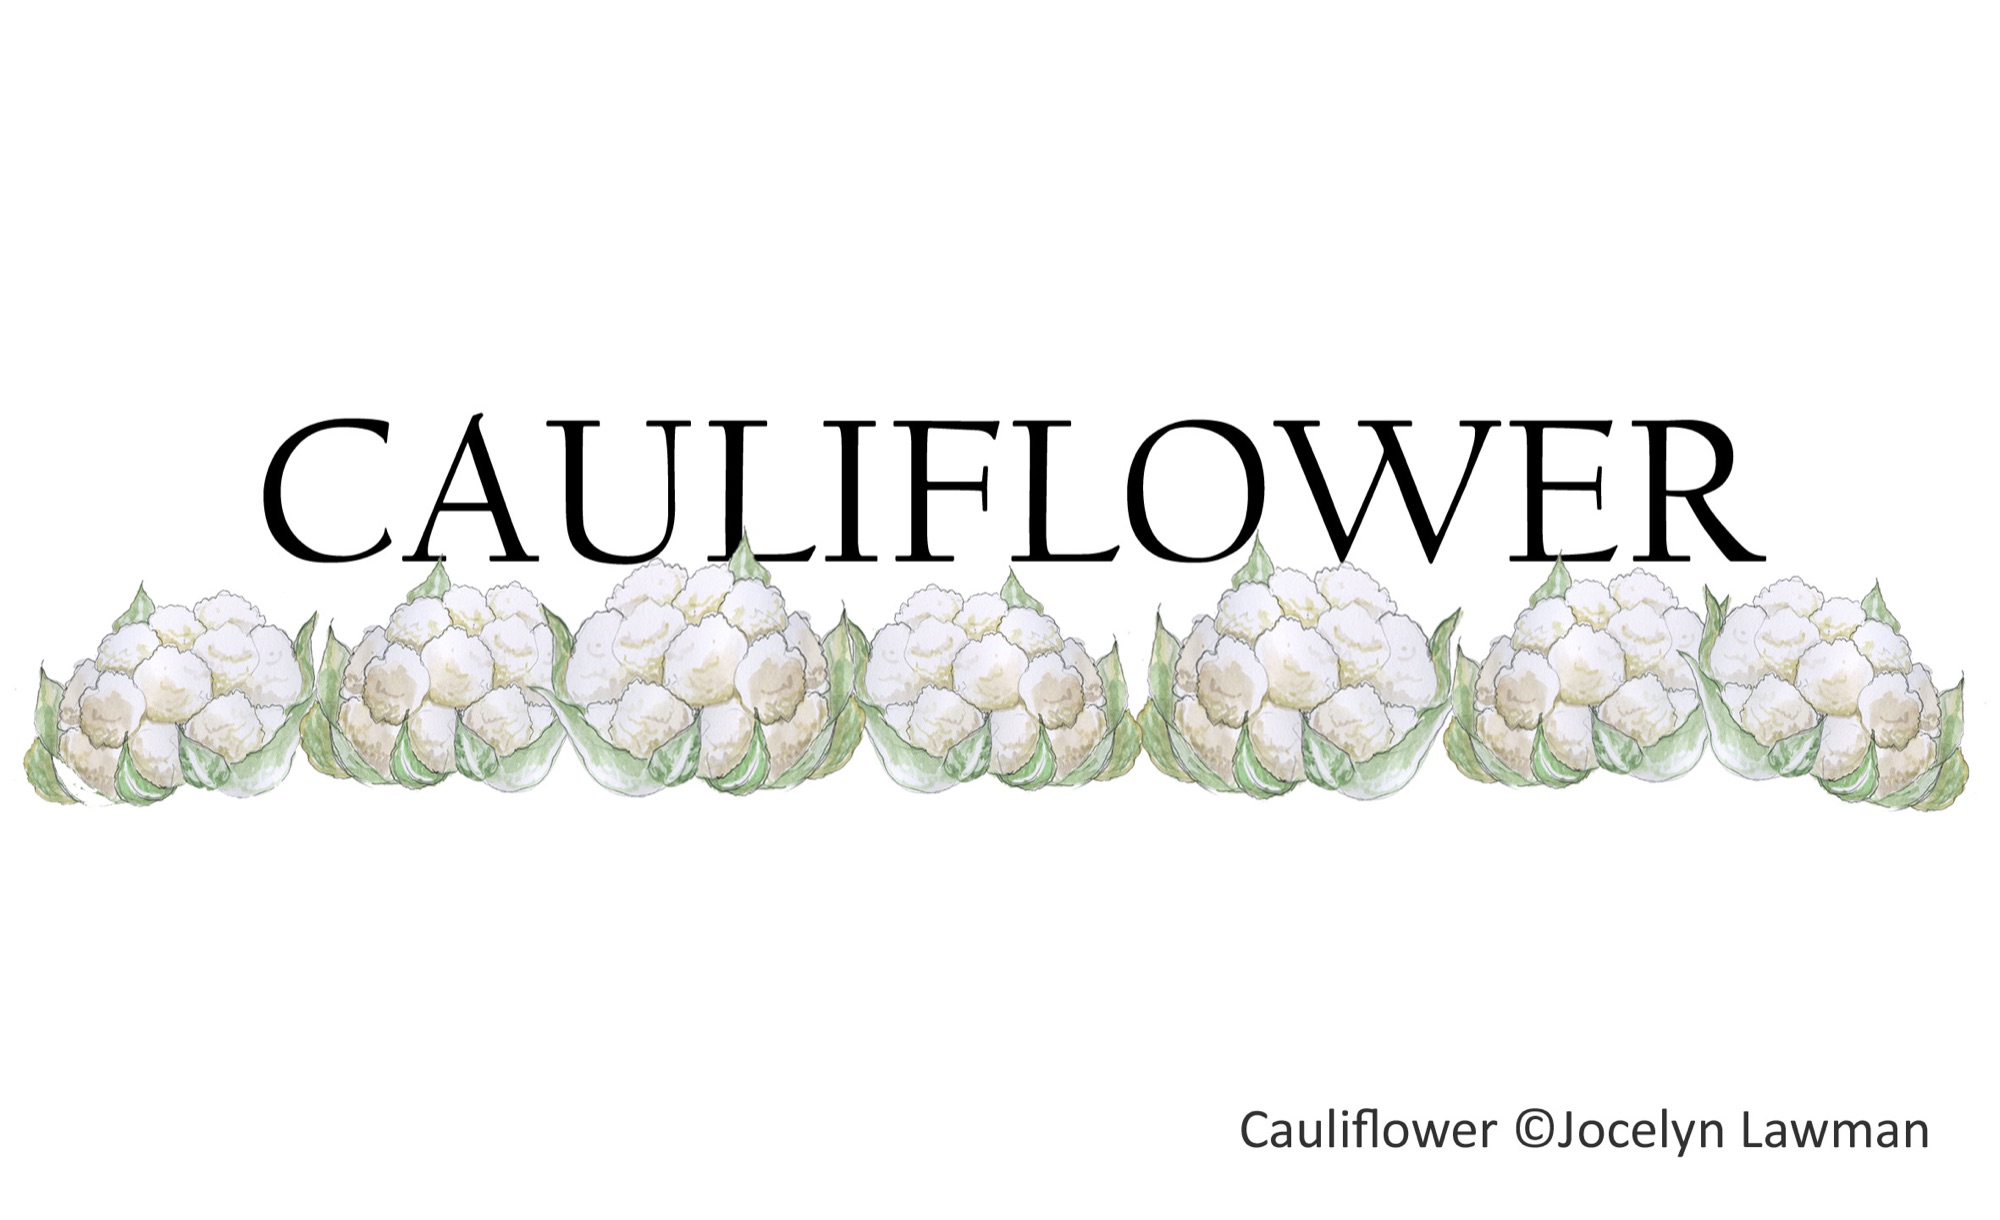 Cauliflower copy.jpg